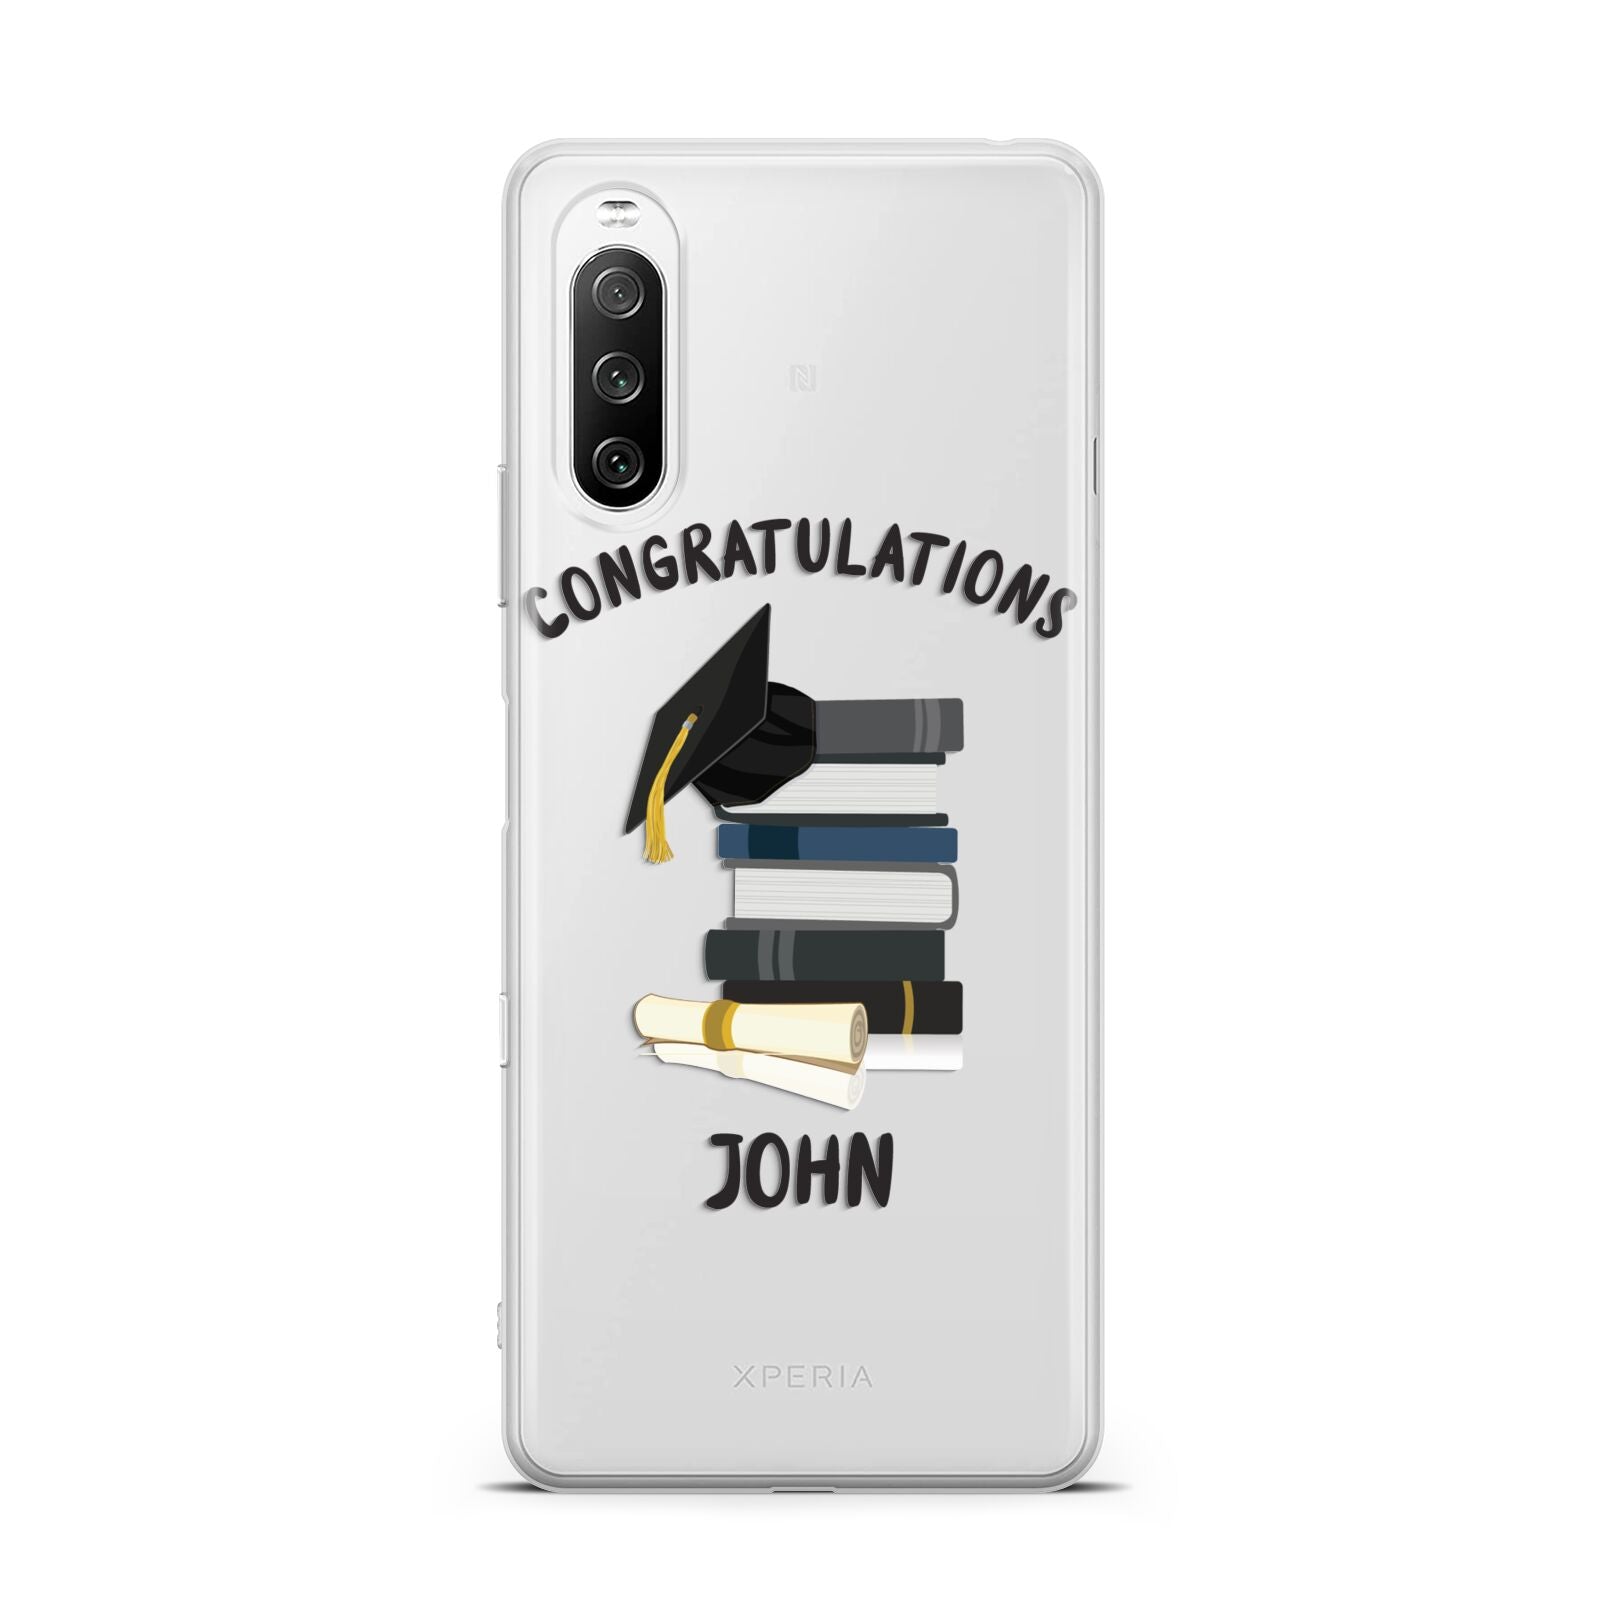 Congratulations Graduate Sony Xperia 10 III Case